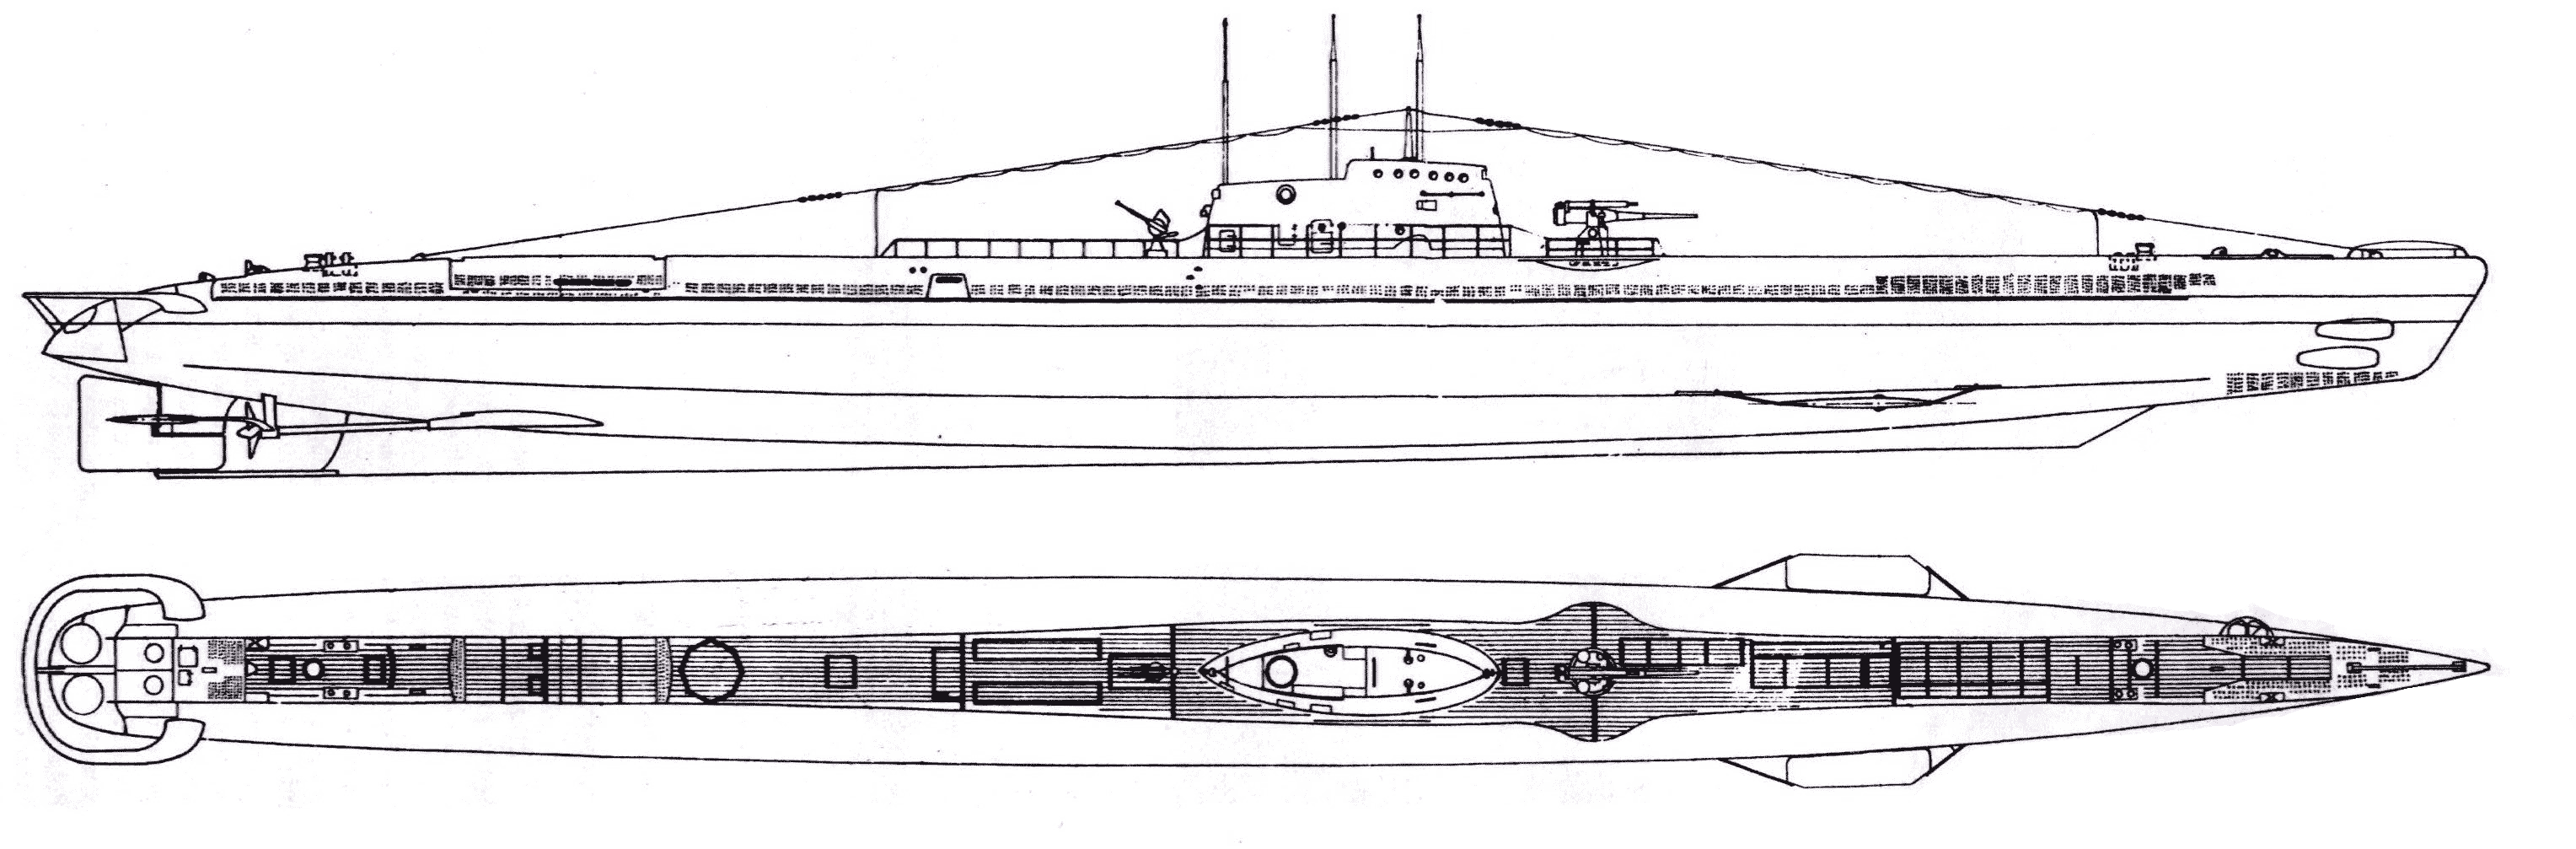 Wilk-class submarine blueprint